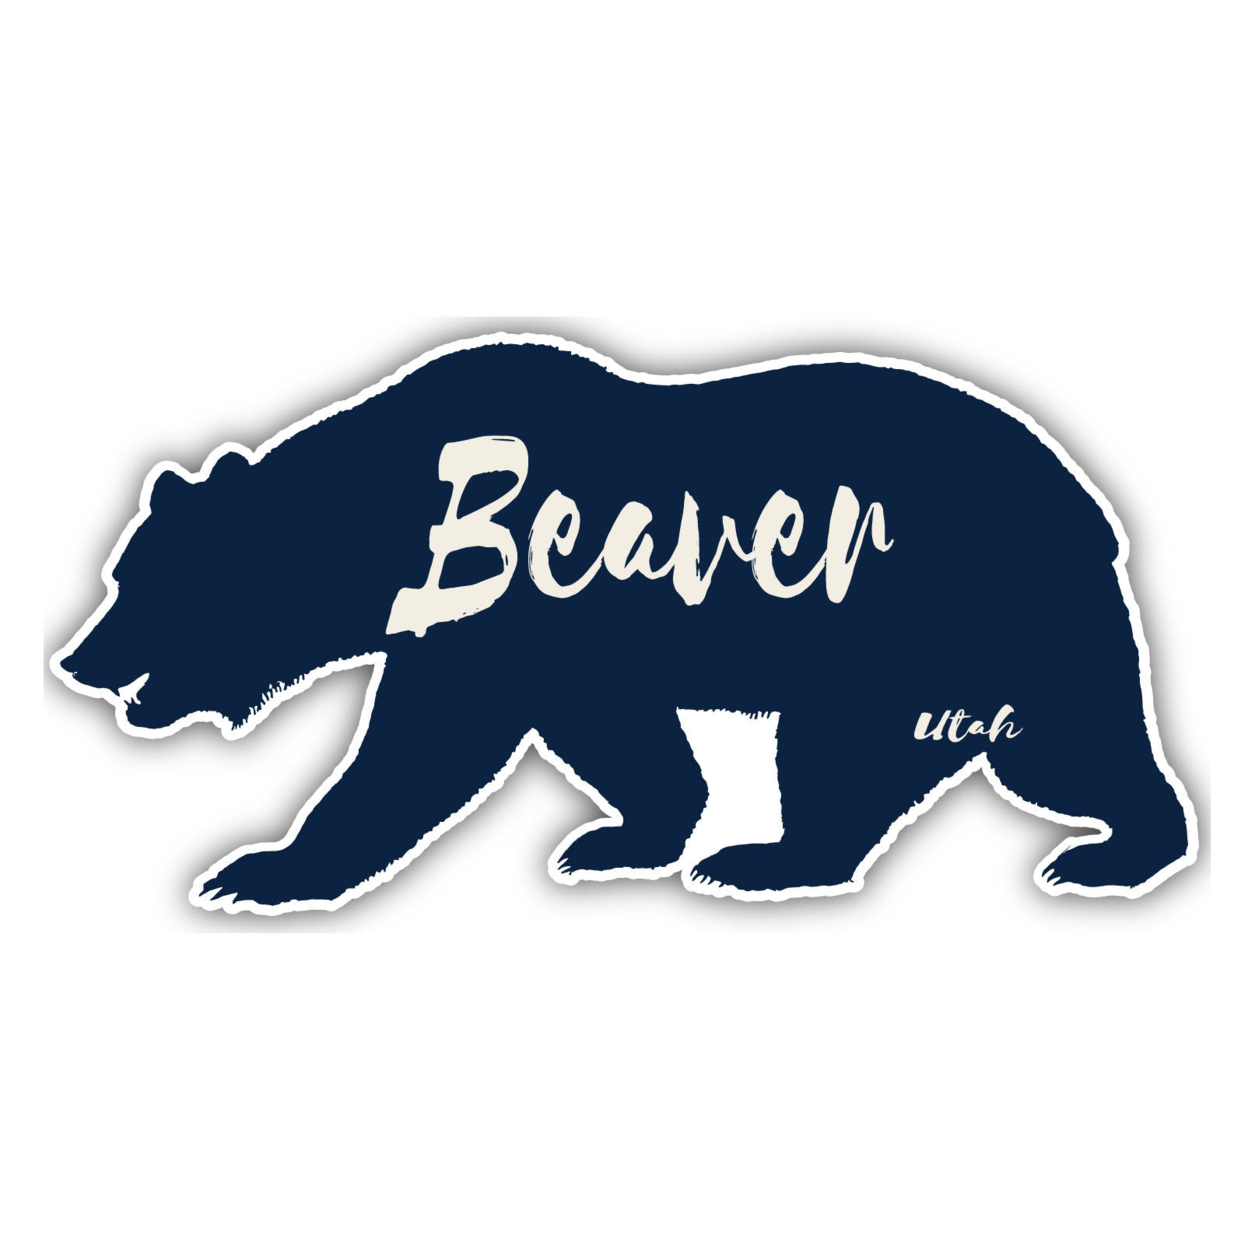 Beaver Utah Souvenir Decorative Stickers (Choose Theme And Size) - 4-Pack, 12-Inch, Bear